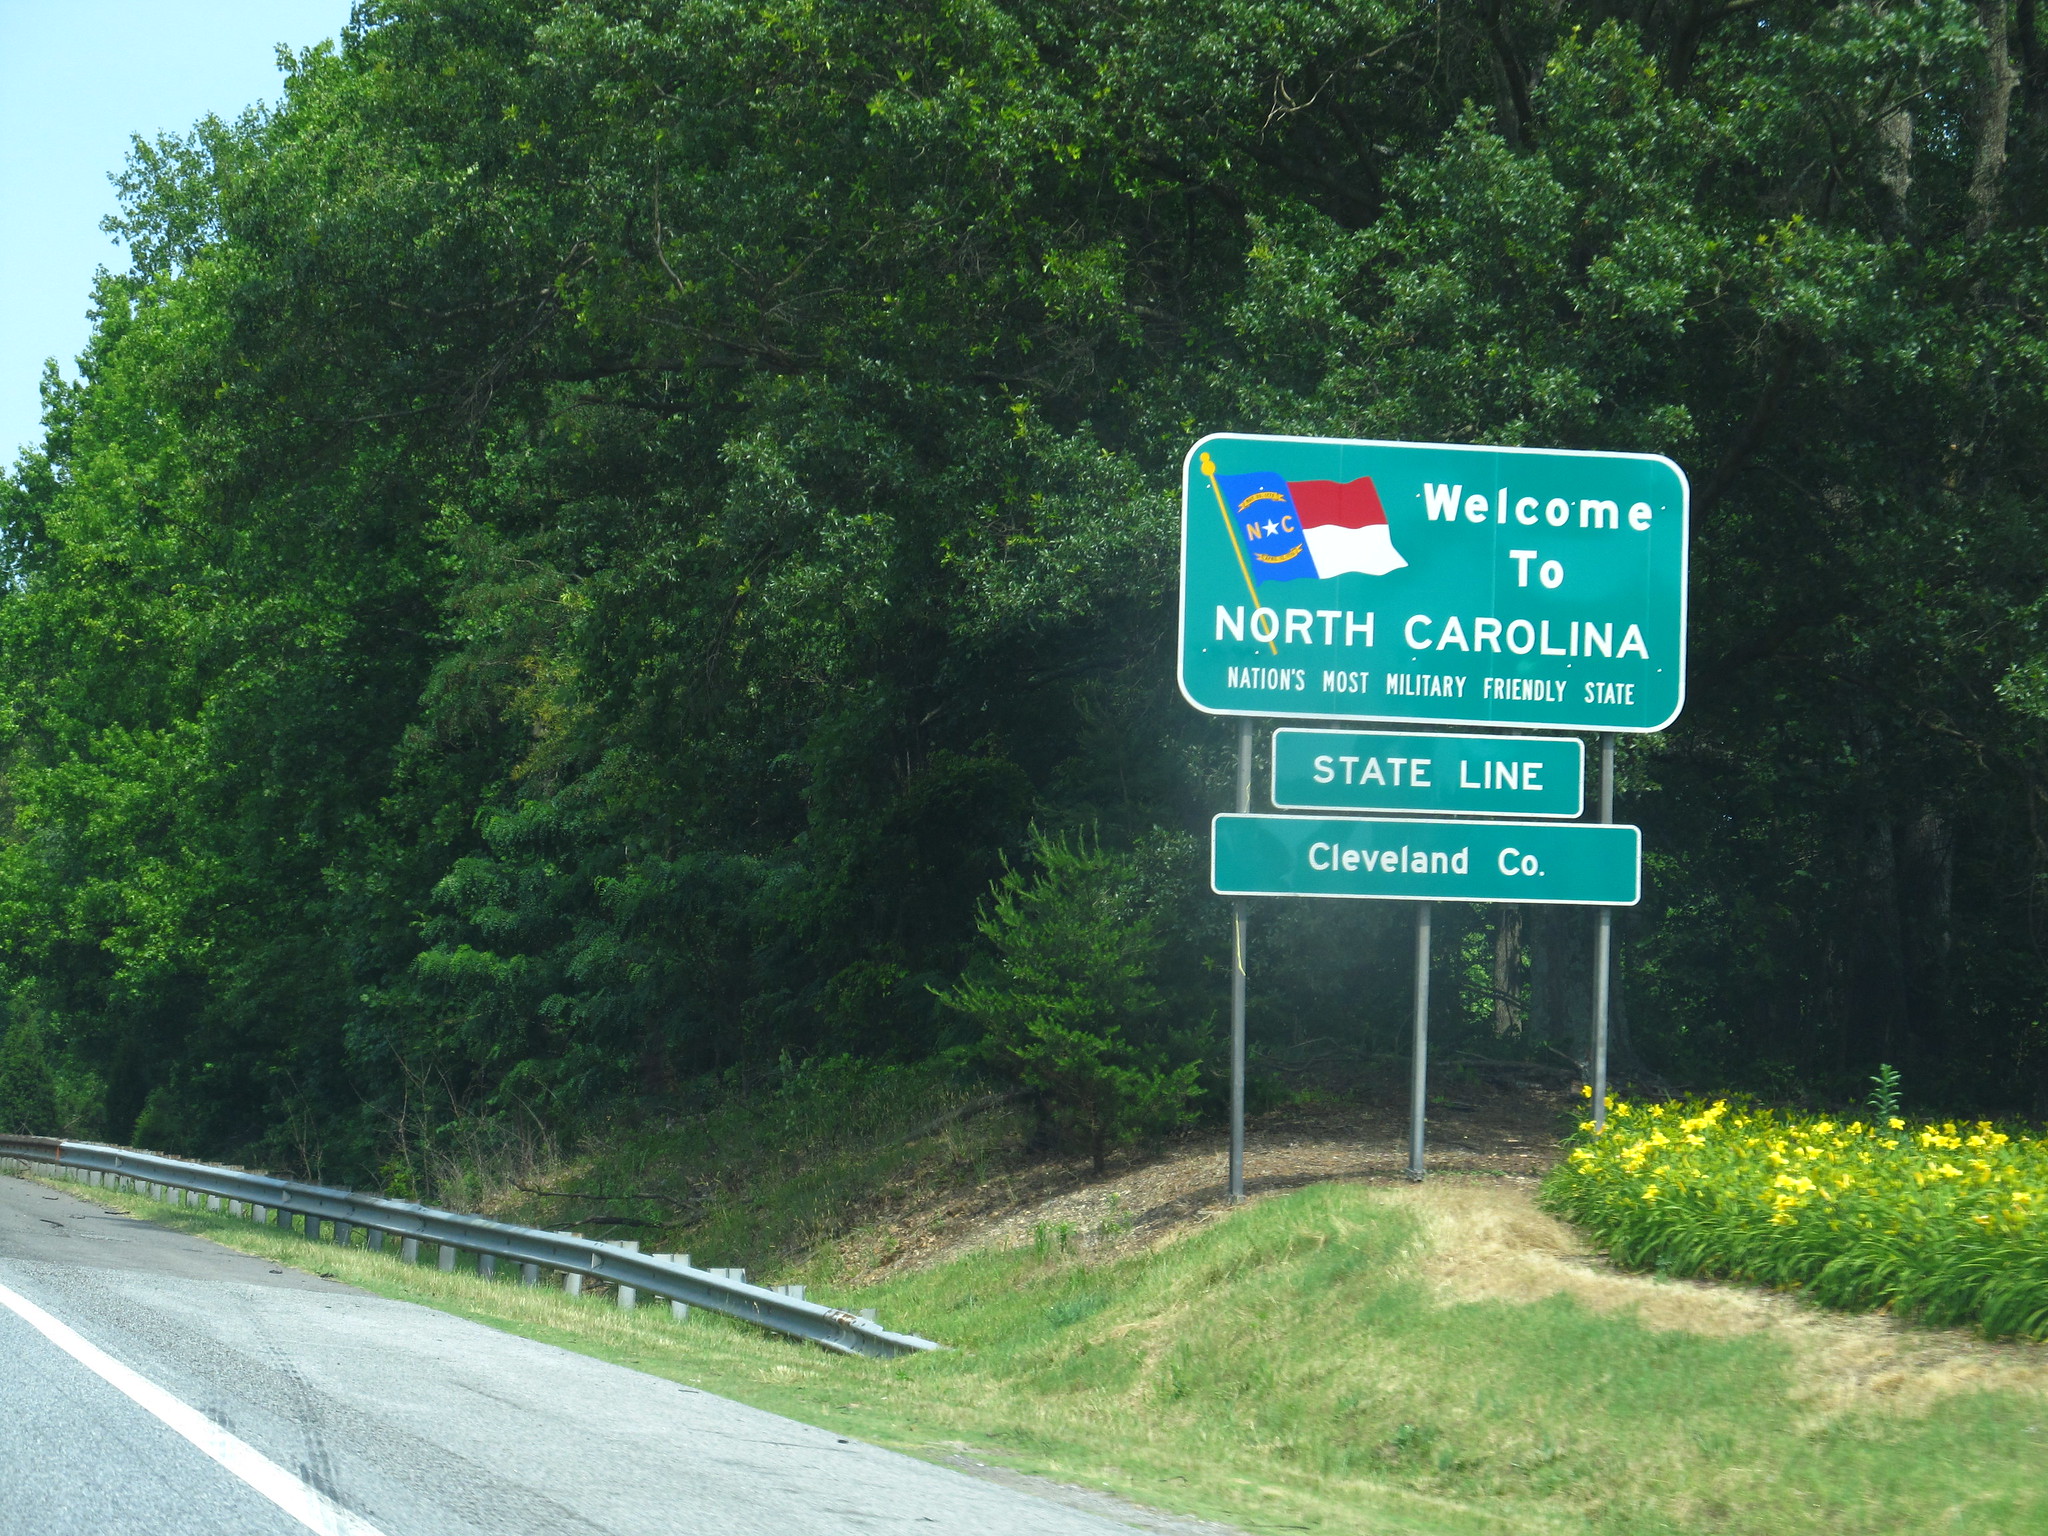 Welcome to North Carolina, I-85 Northbound